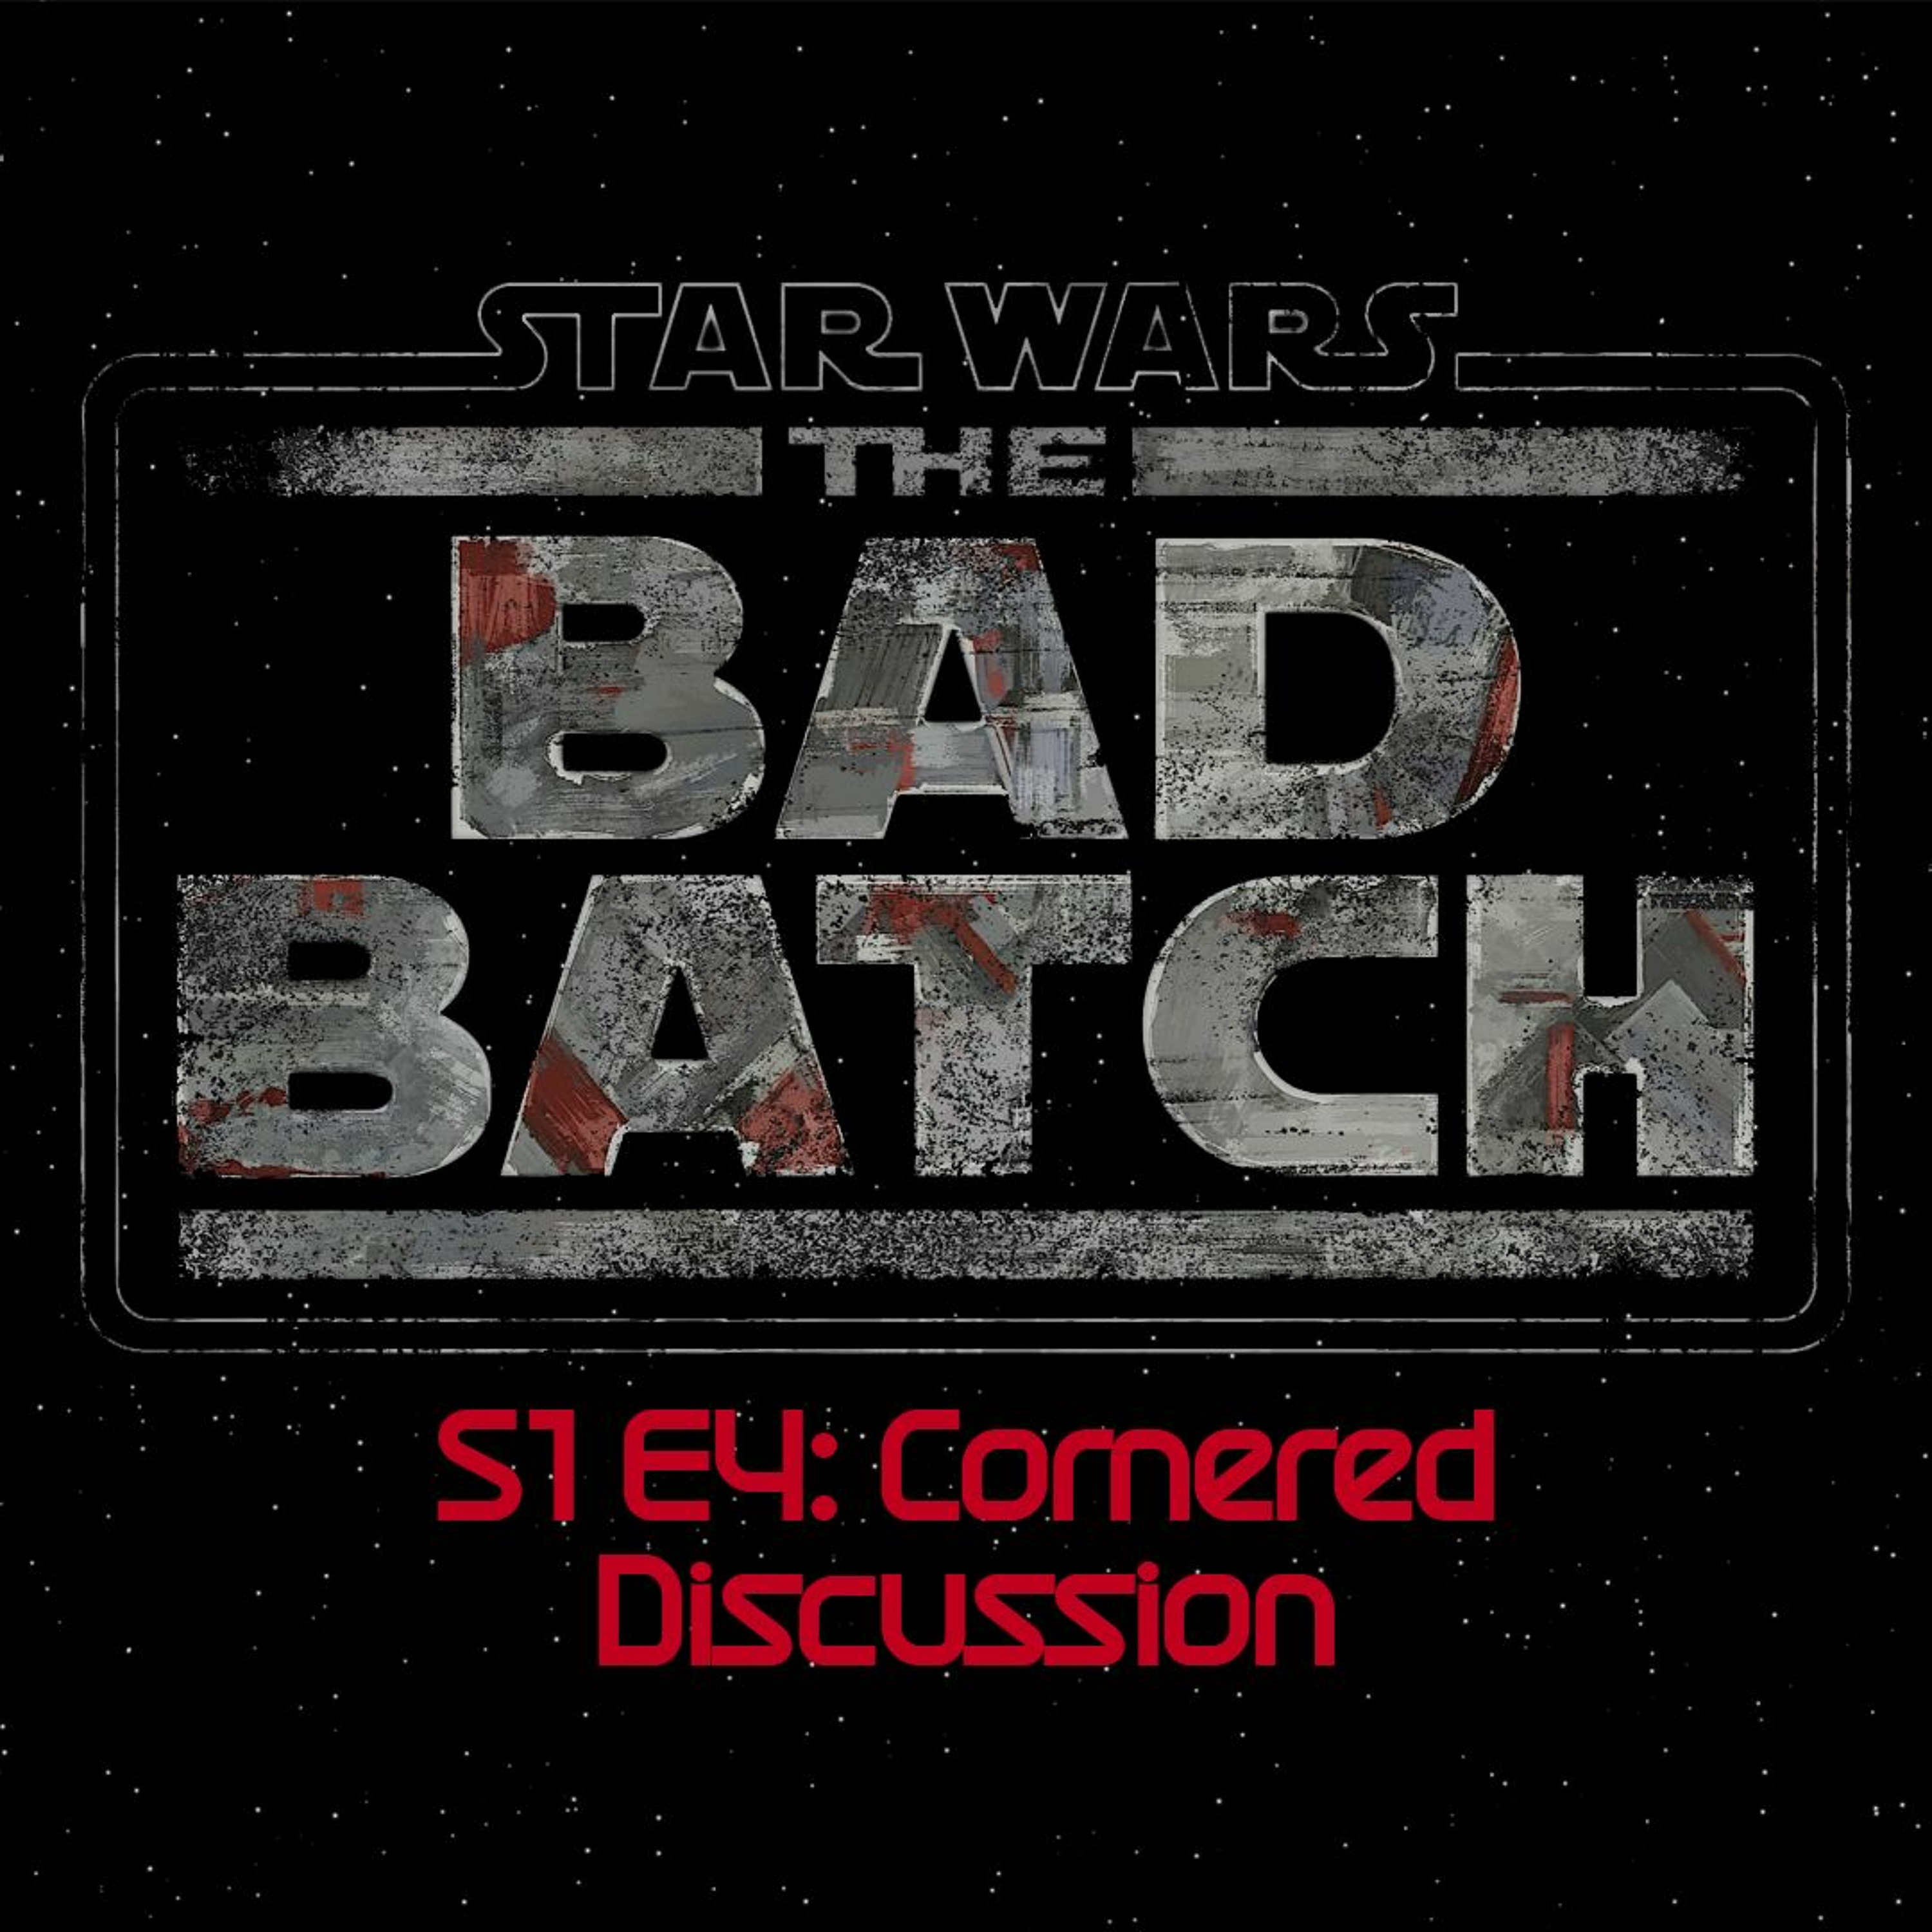 The Bad Batch S1E4: Cornered